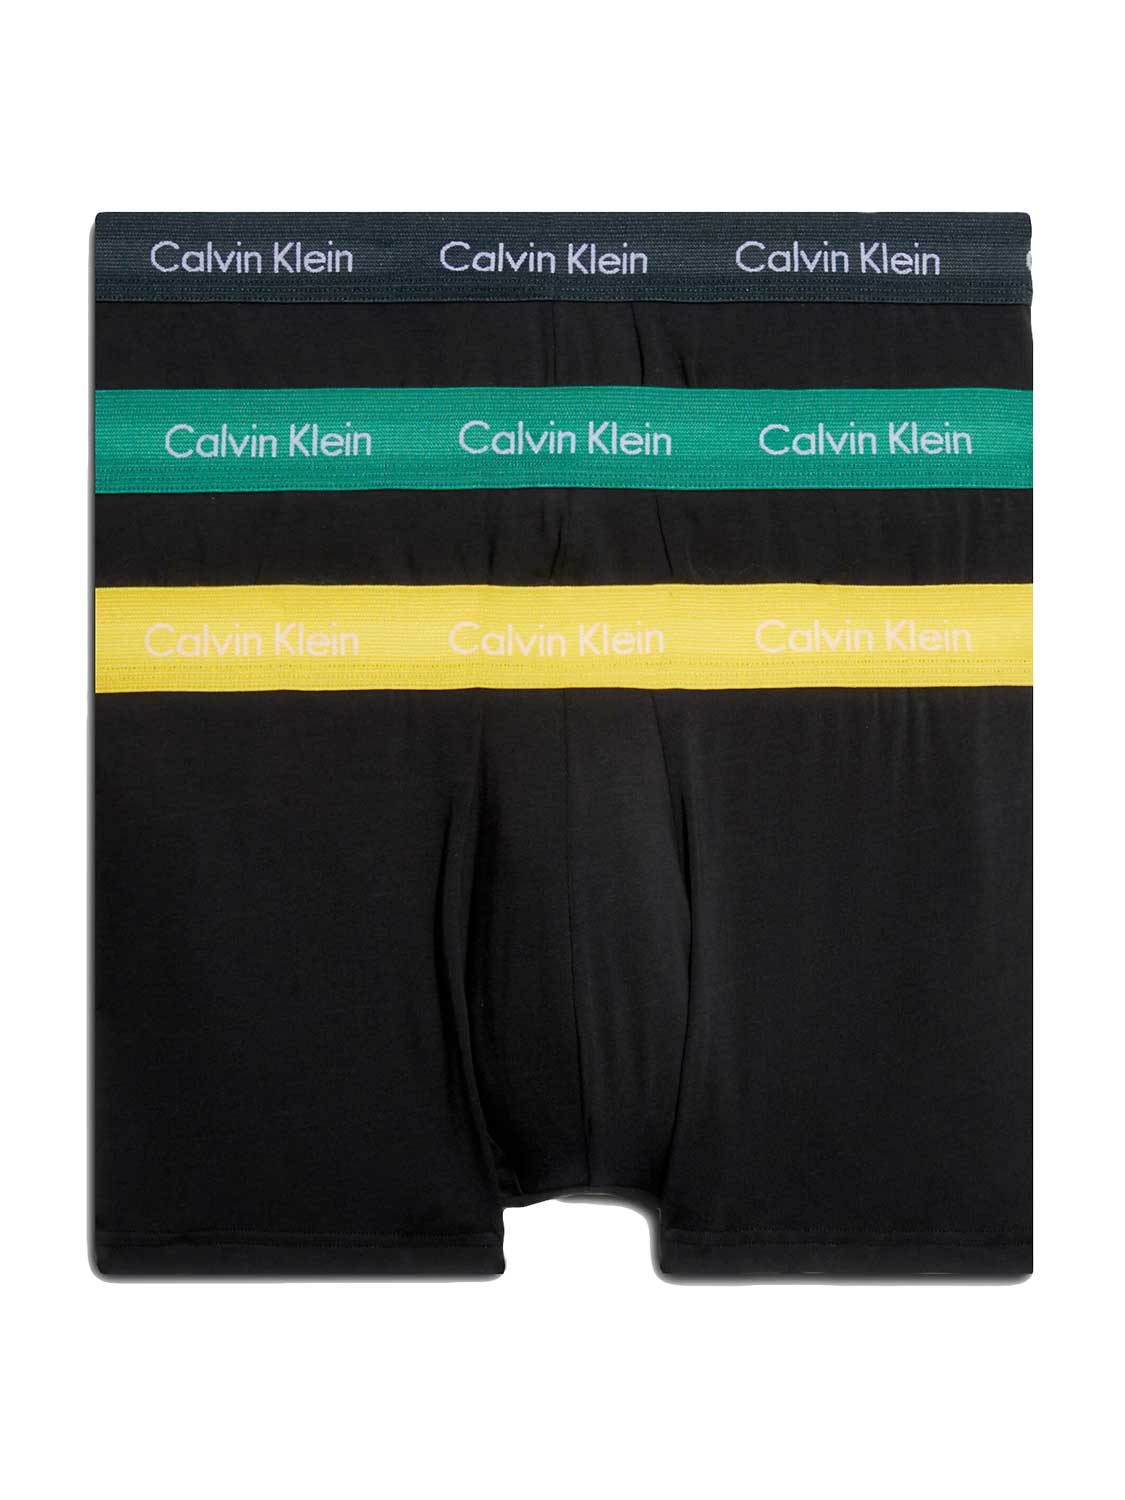 Calvin Klein low rise trunks (3-pack) - lage heren boxers kort - zwart met gekleurde tailleband - Maat: L